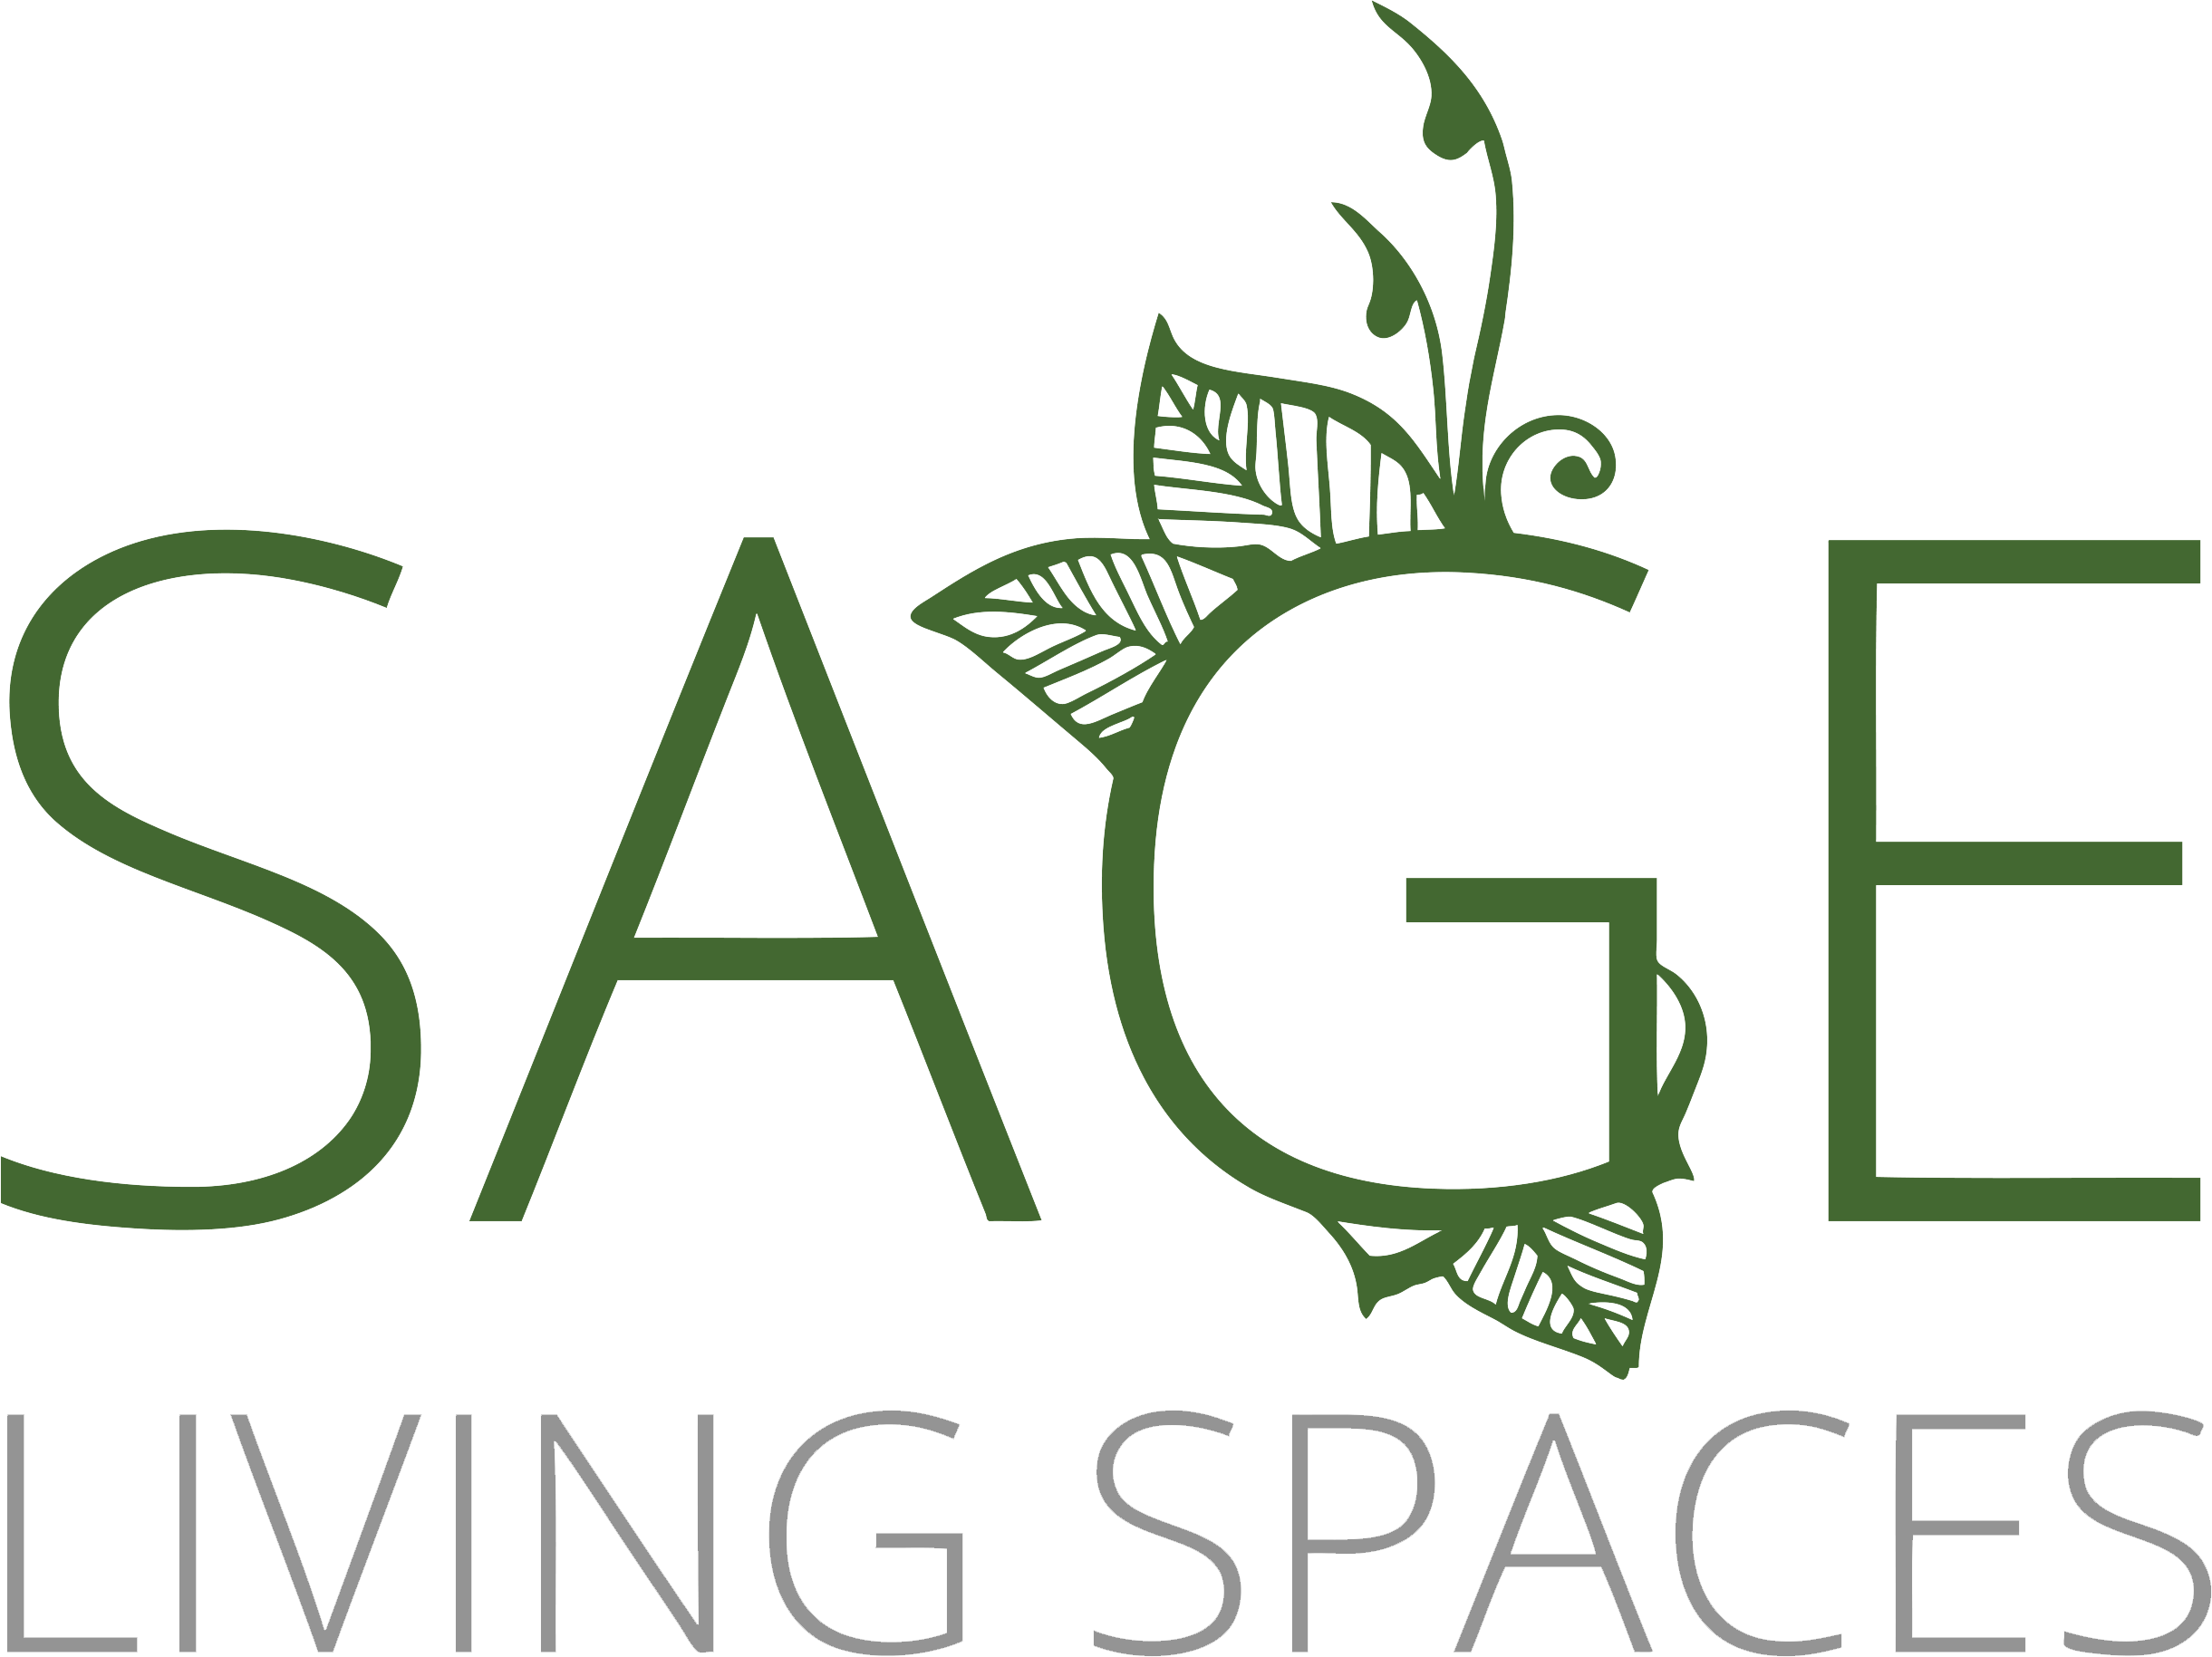 Sage Living Spaces